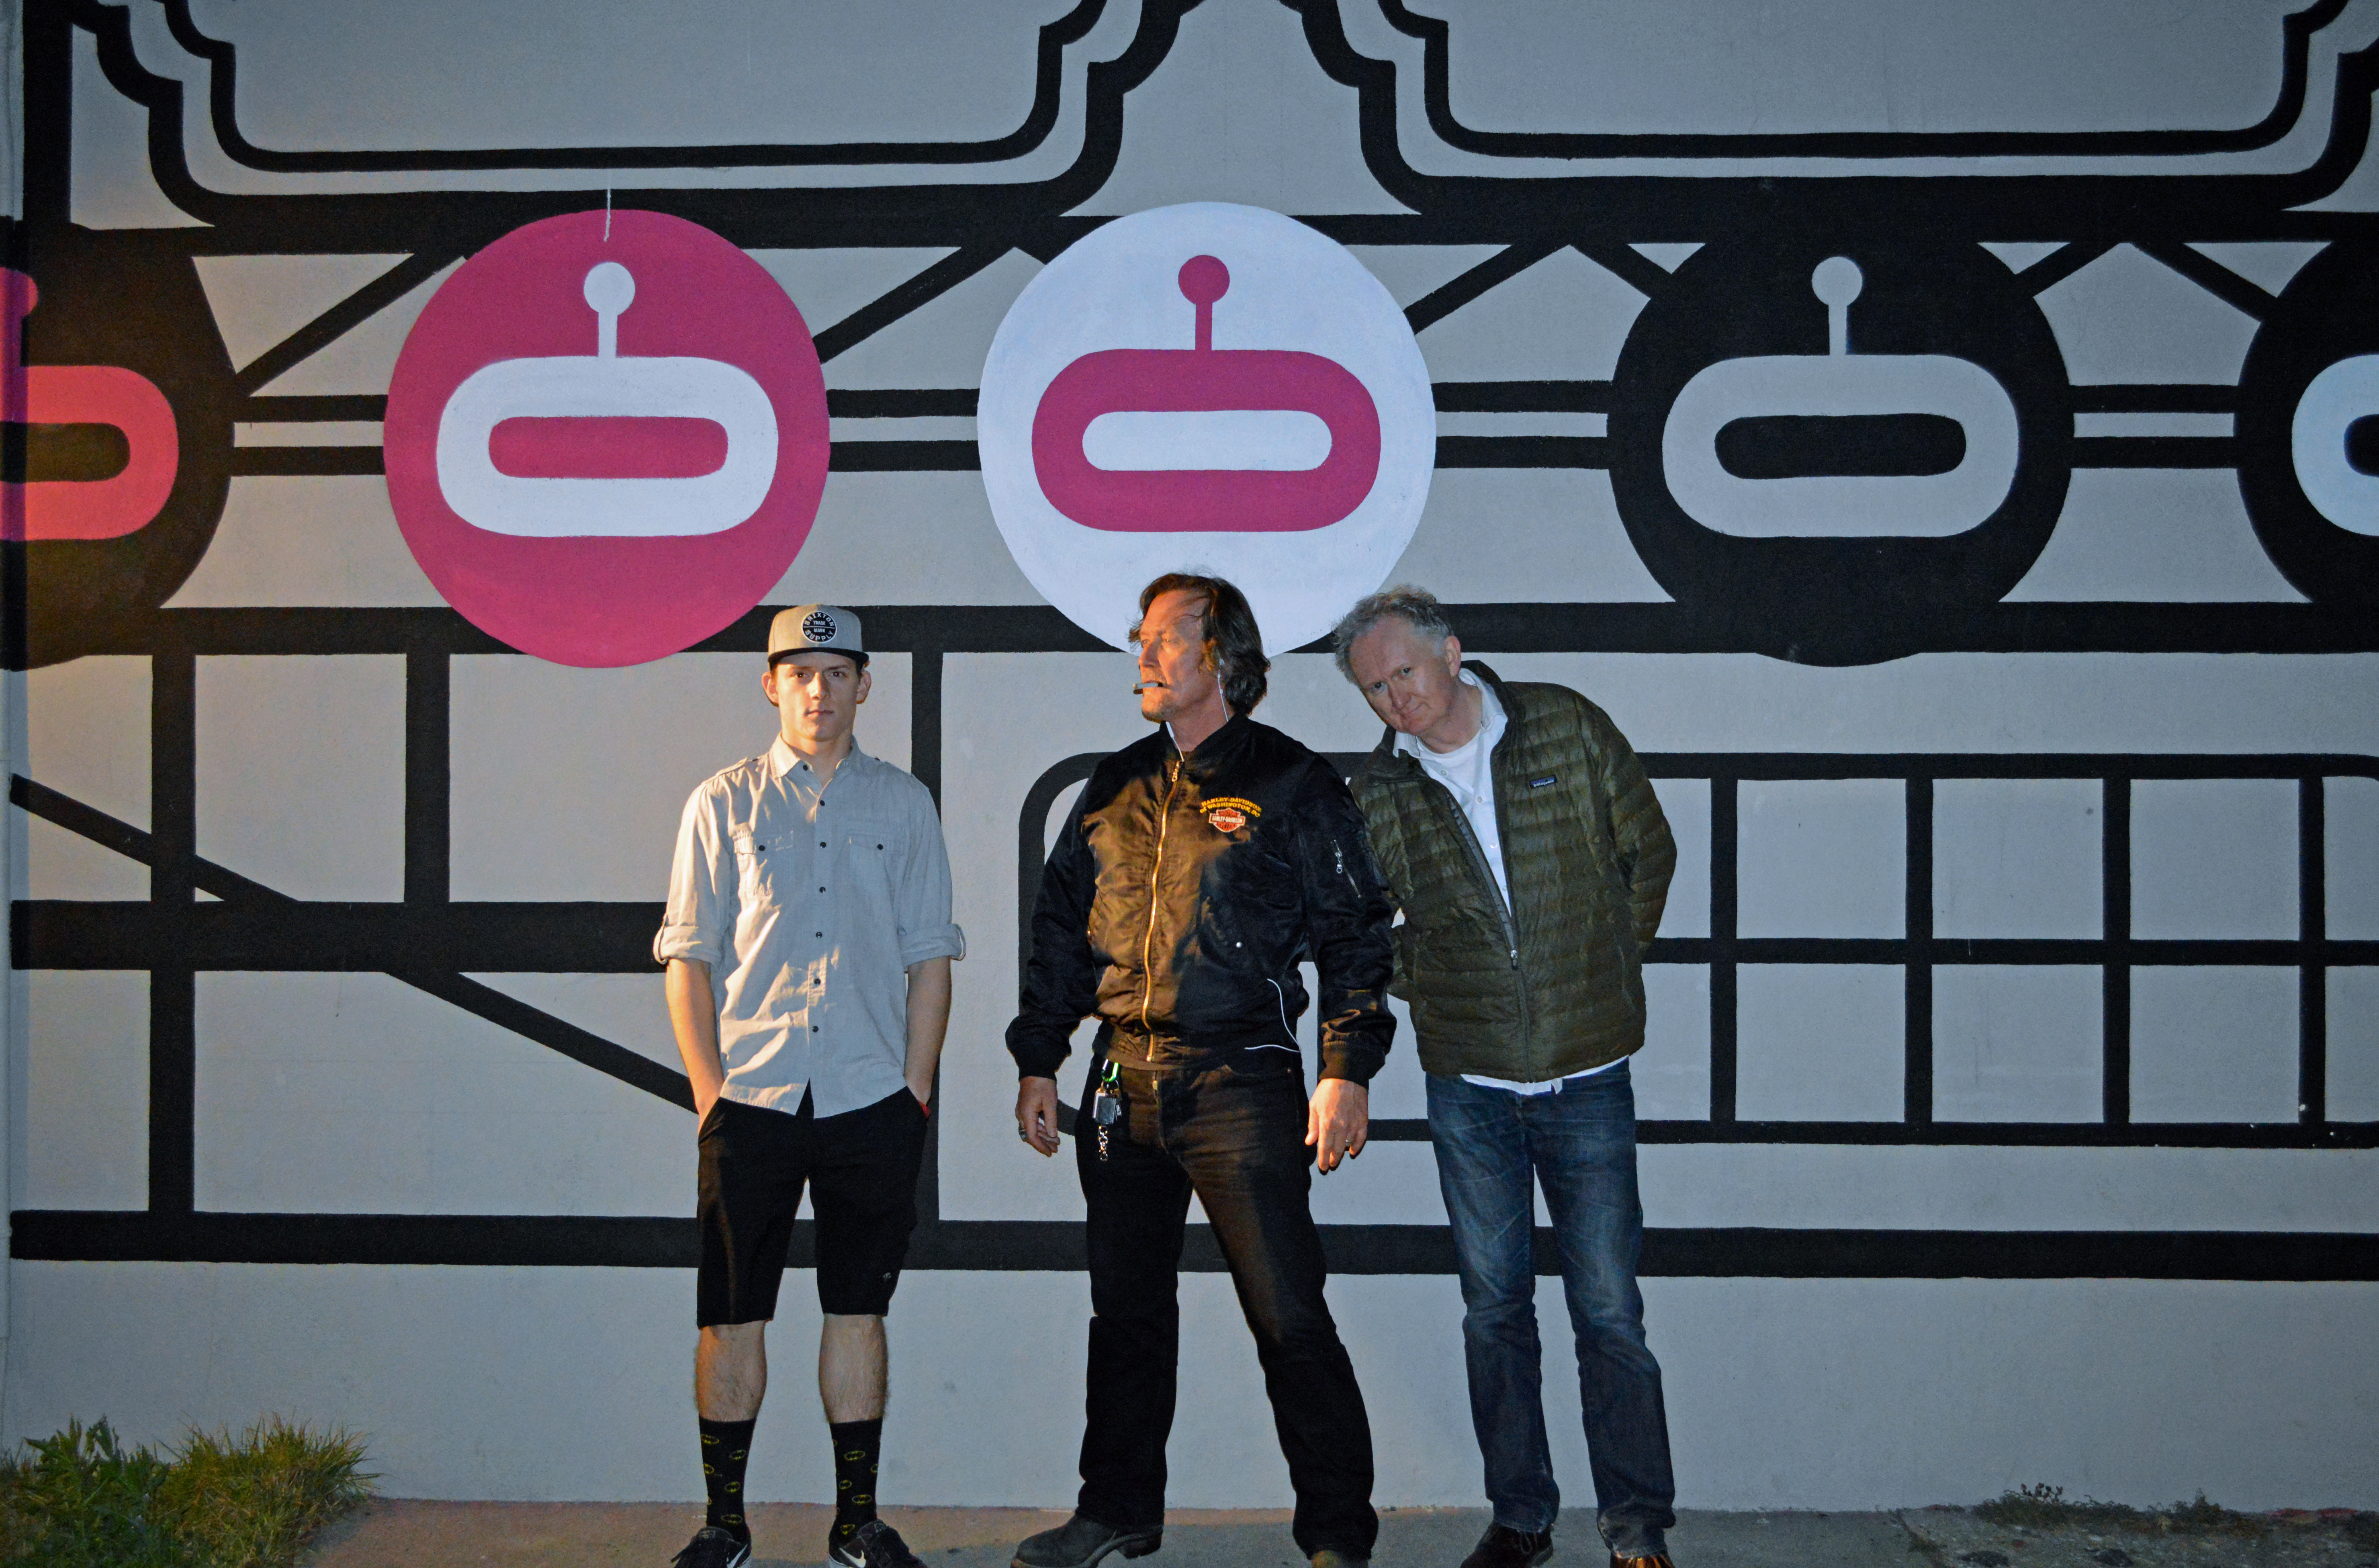 Beau Bridgewater, Robert Patrick, and Gerry Grennell - Austin, TX, 2014